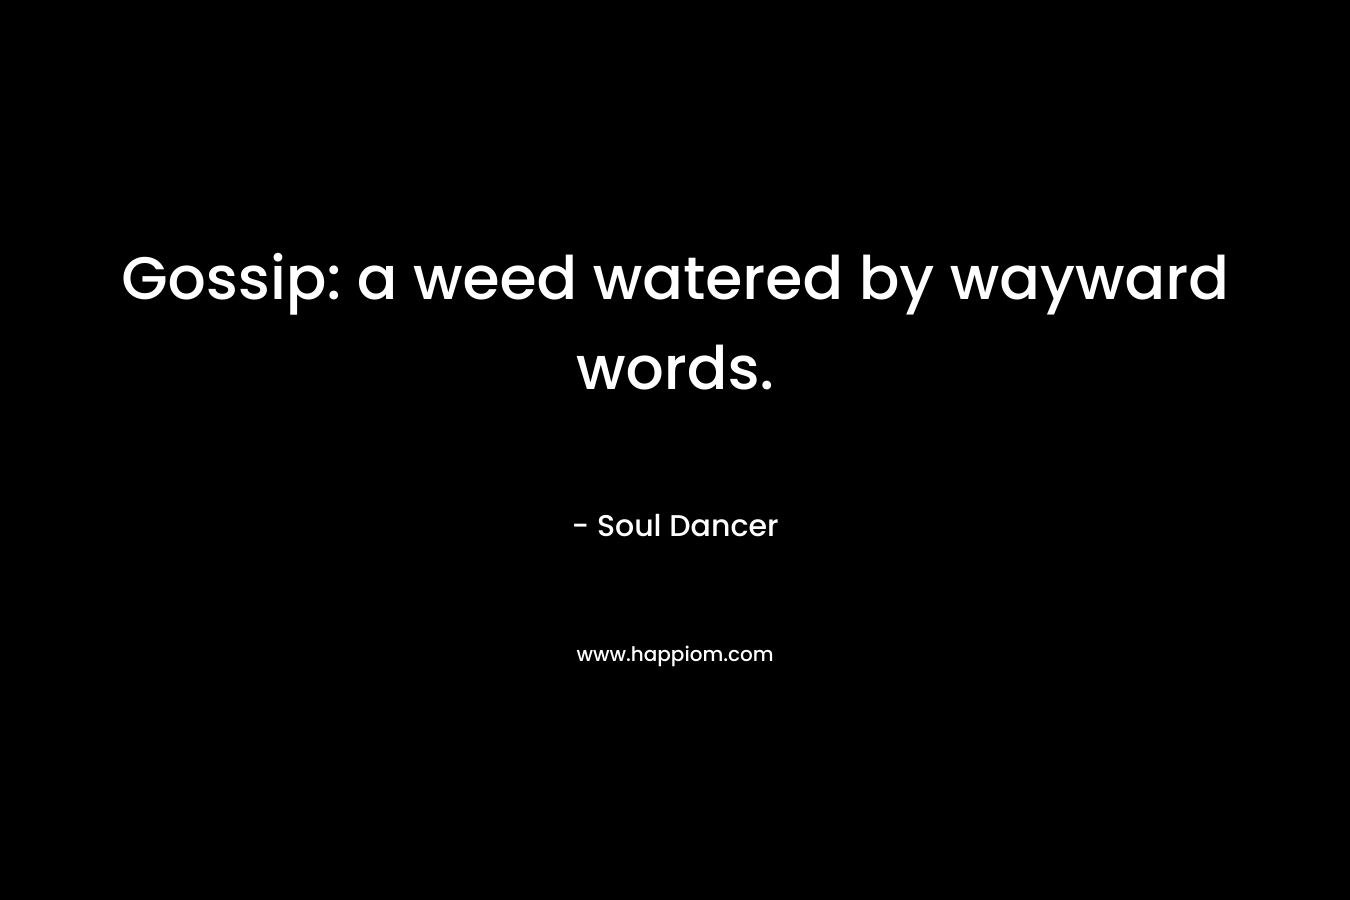 Gossip: a weed watered by wayward words.